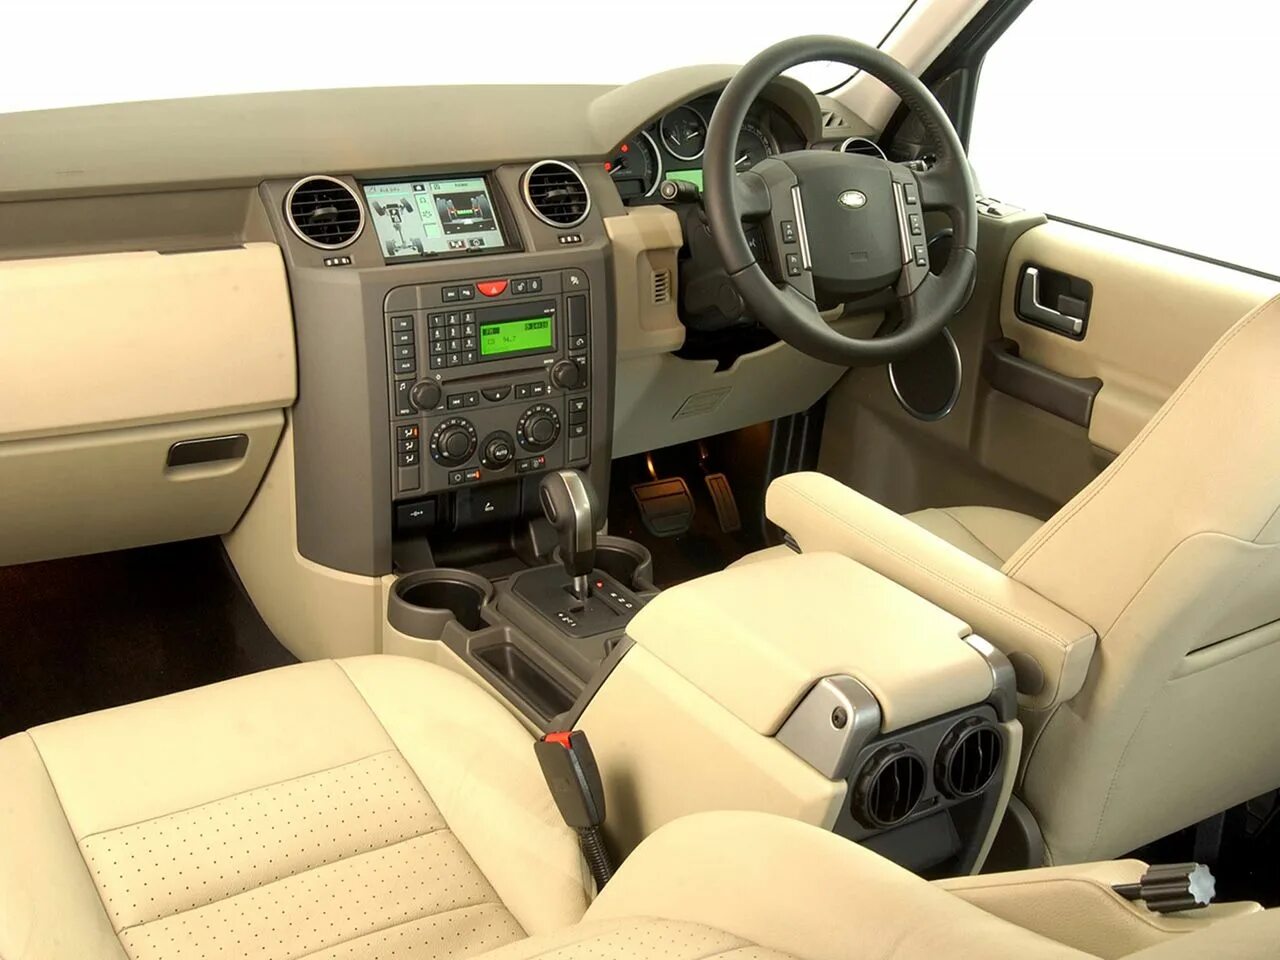 Панель дискавери 3. Land Rover Discovery 3 2005. Land Rover Discovery 3 салон. Land Rover Discovery 3 Interior. Лэнд Ровер Дискавери 3 салон.